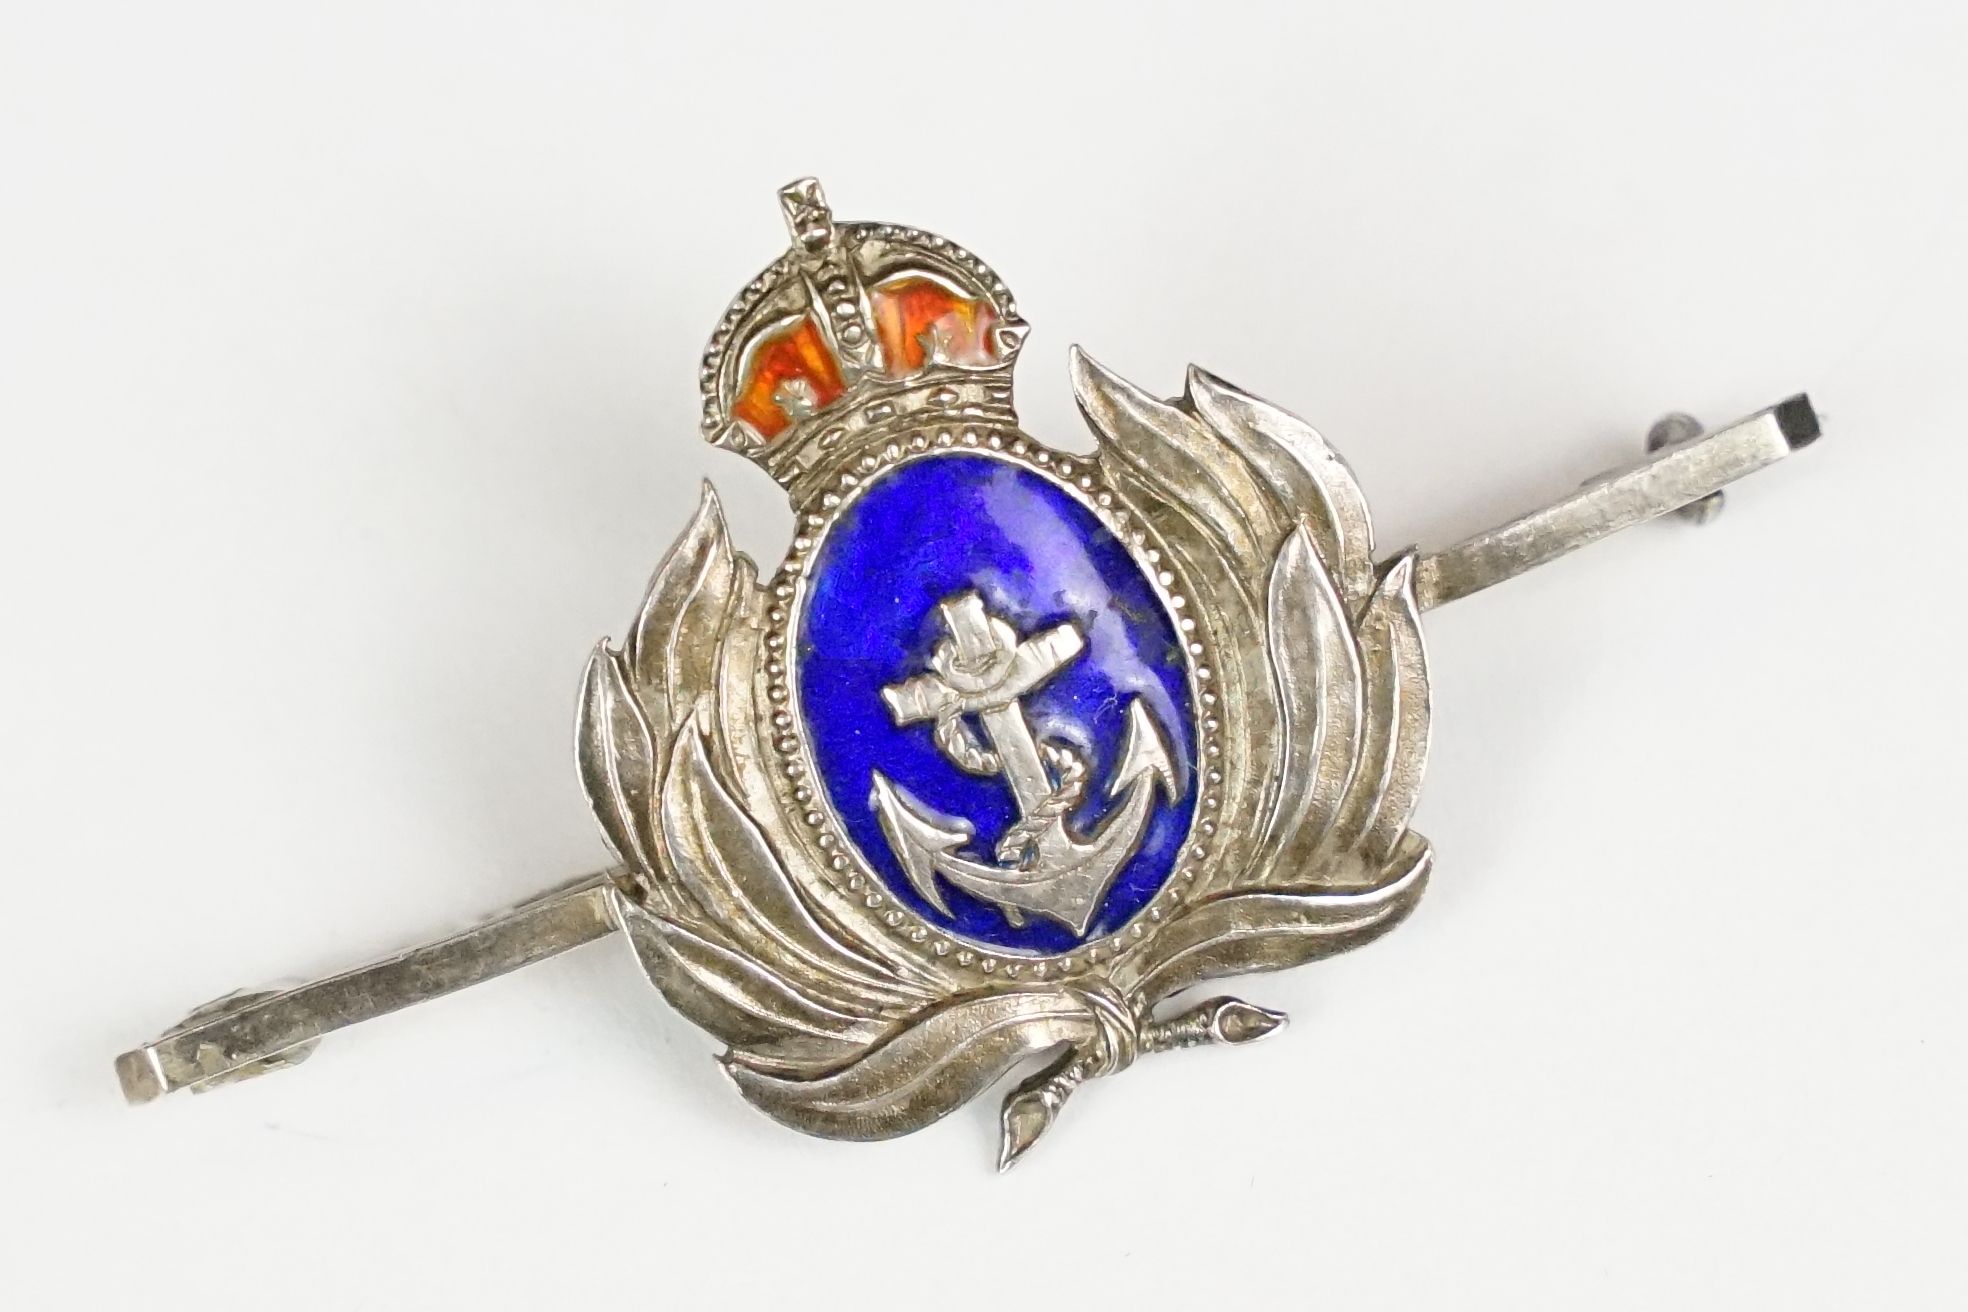 WW2 sterling silver and enamel naval sweetheart brooch - Image 2 of 4